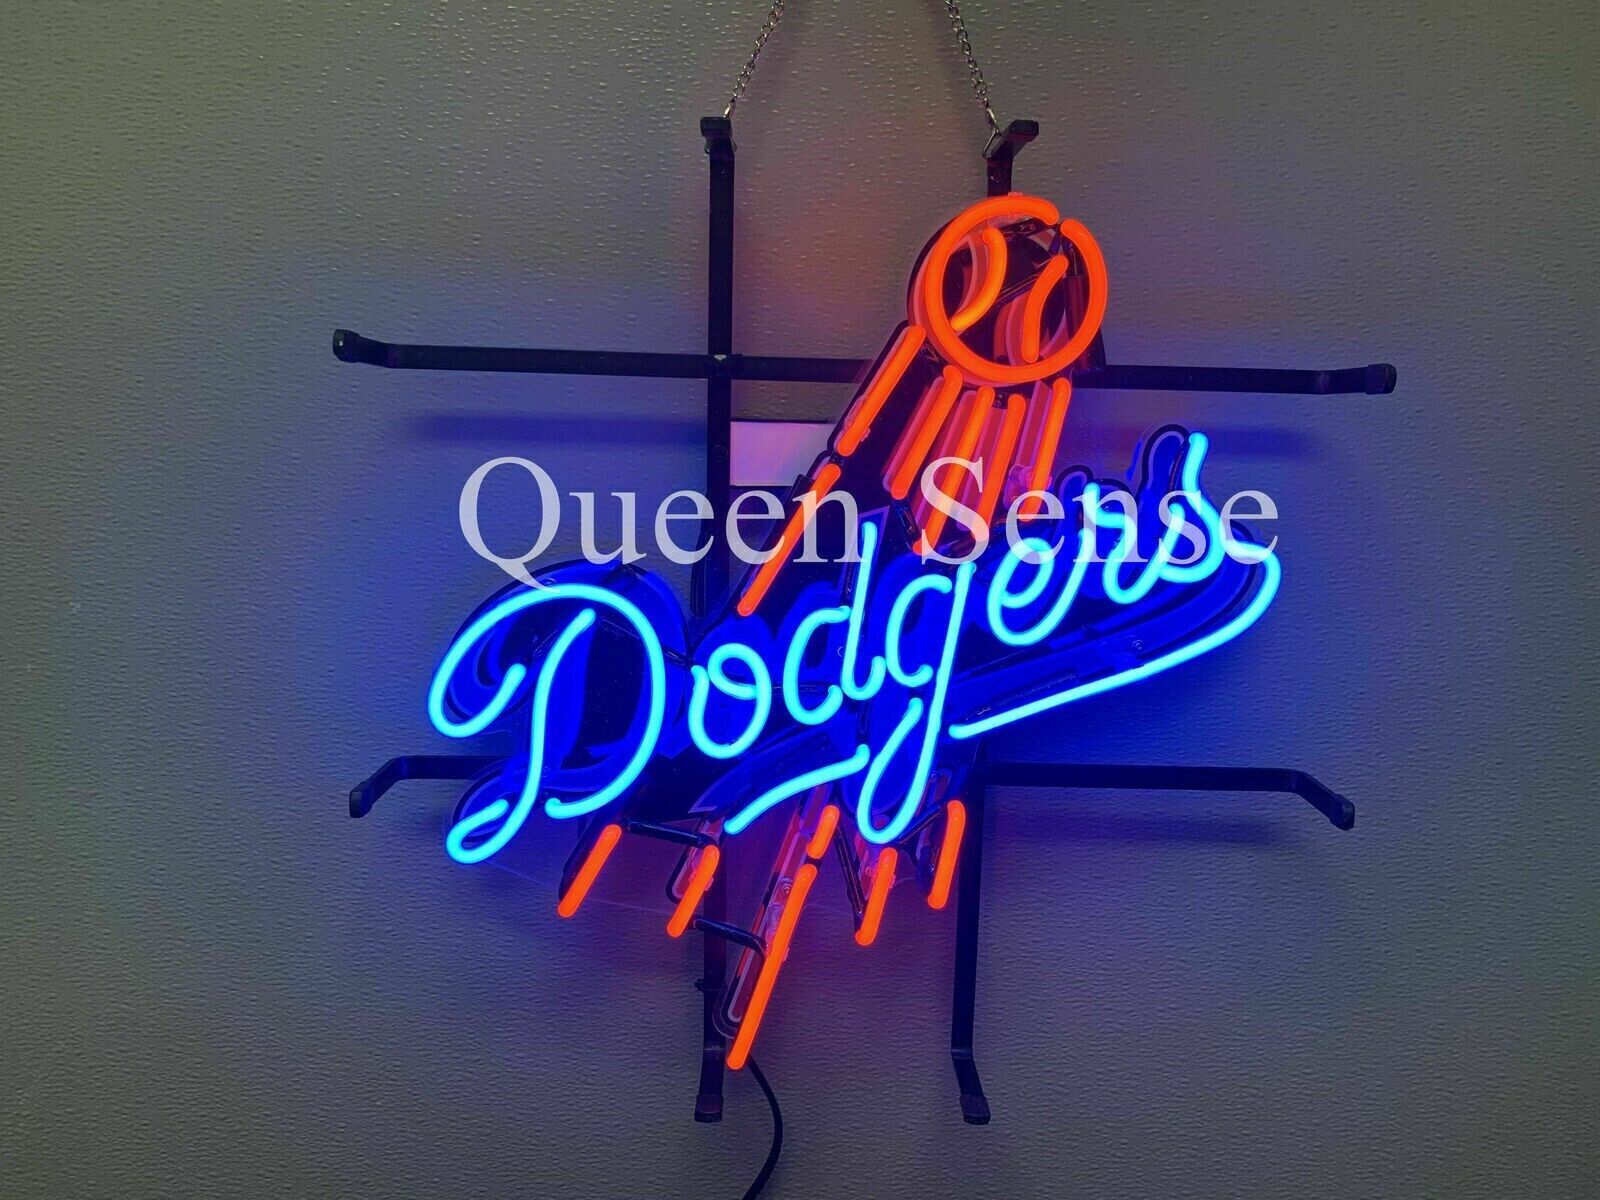 New Los Angeles Dodgers HD ViVid Neon Sign 20